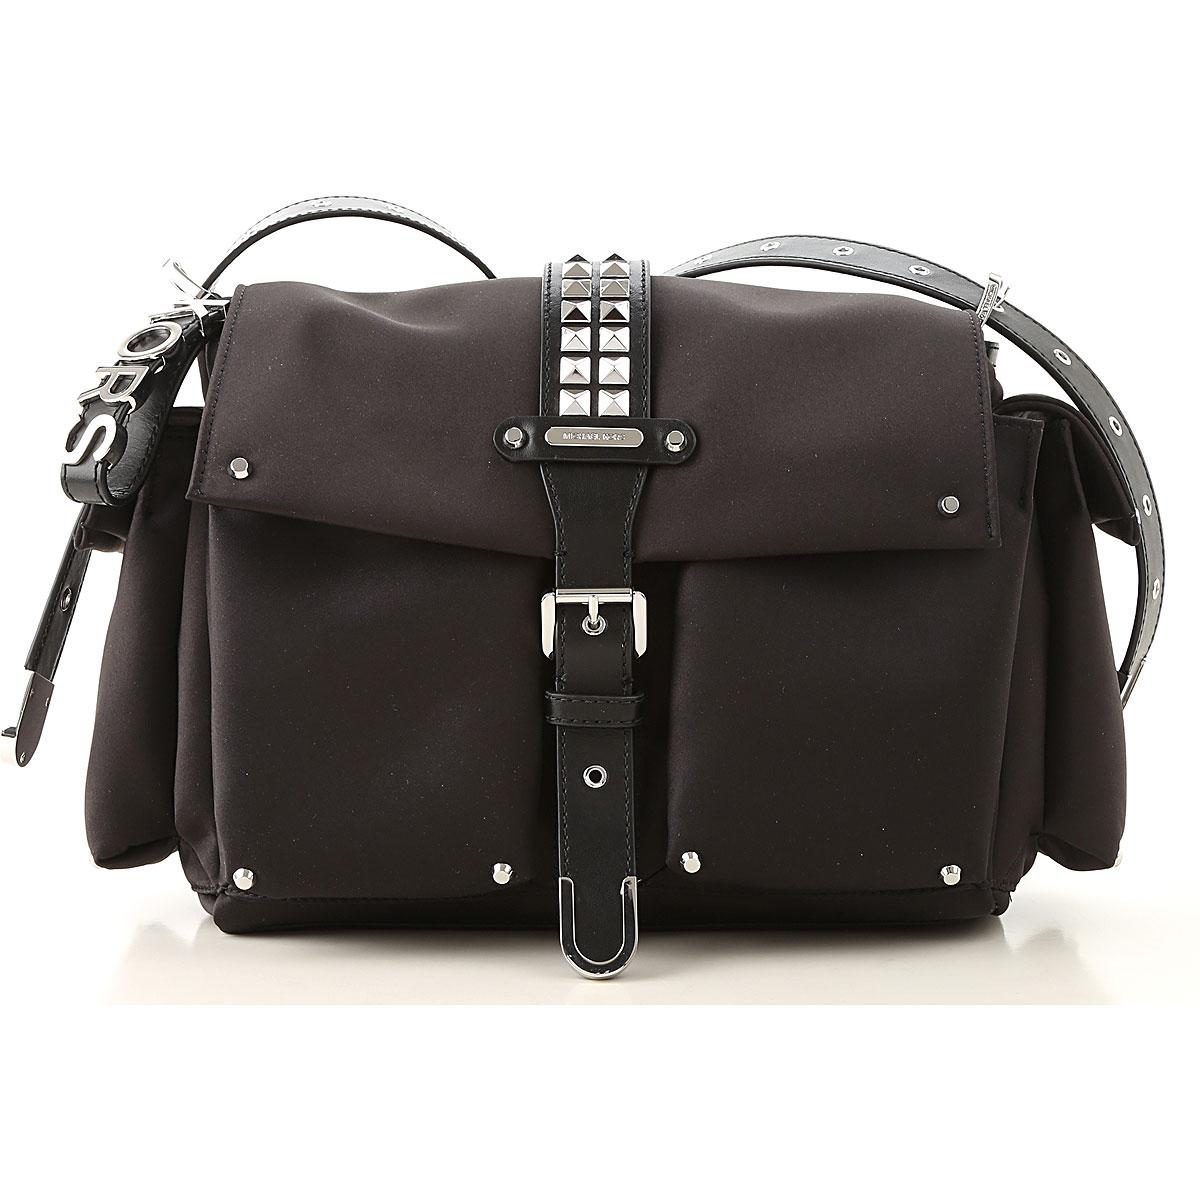 Michael Kors Black Fabric Shoulder Bag - Save 3% - Lyst